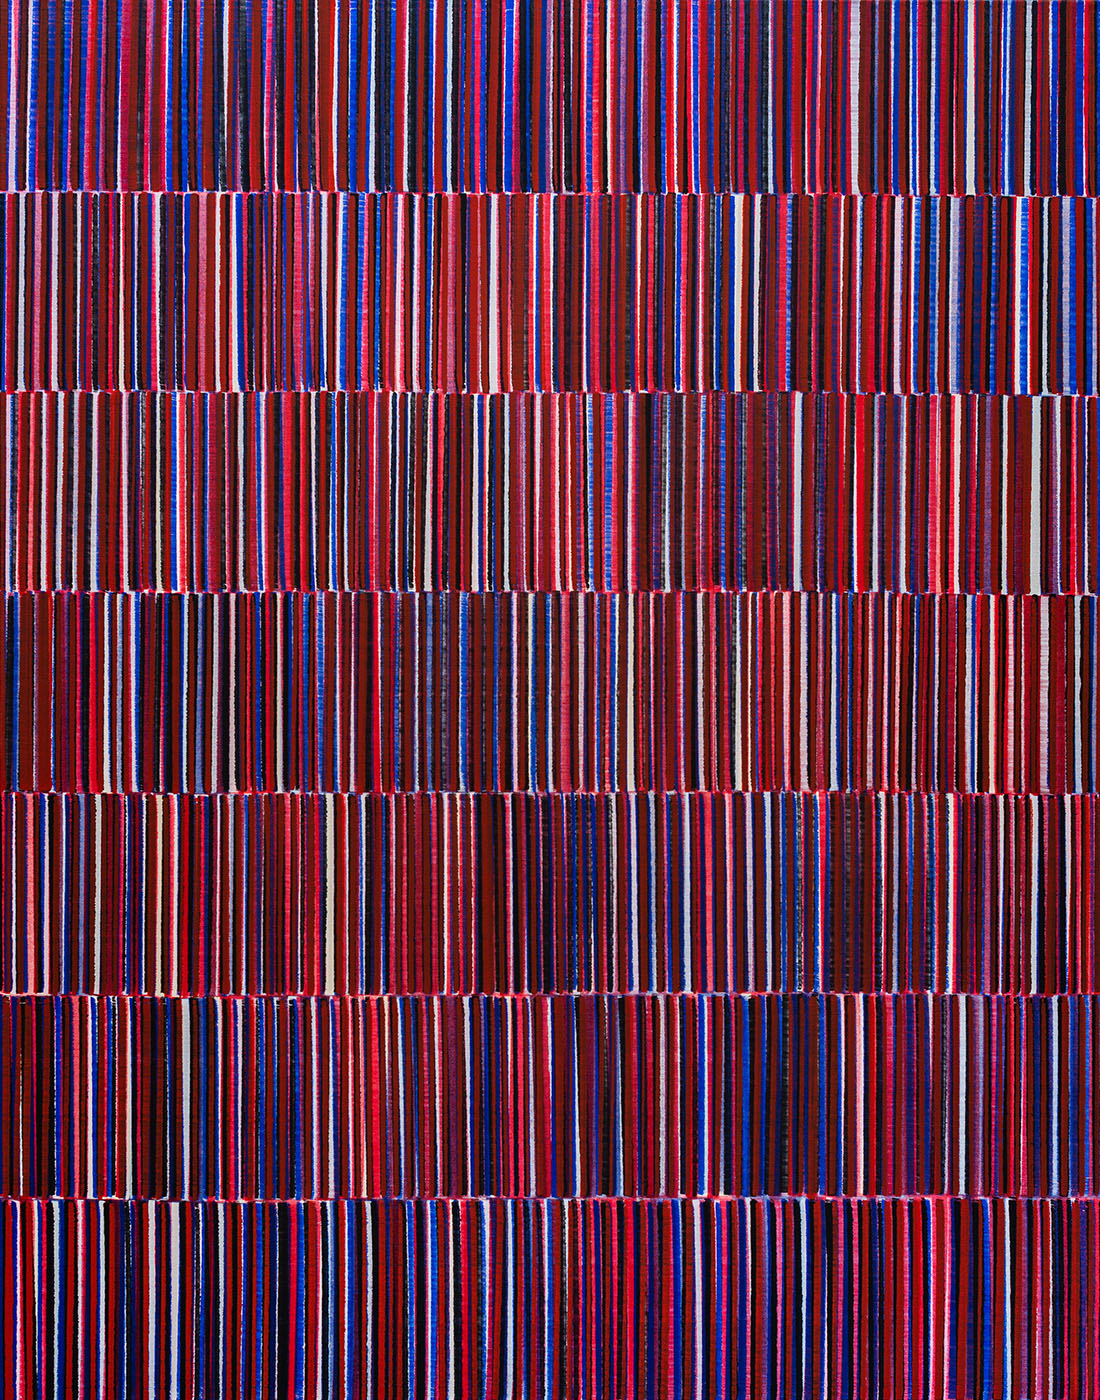 Nikola Dimitrov, FarbKlang BlauRot I, 2019, Pigmente, Bindemittel auf Leinwand, 140 × 110 cm